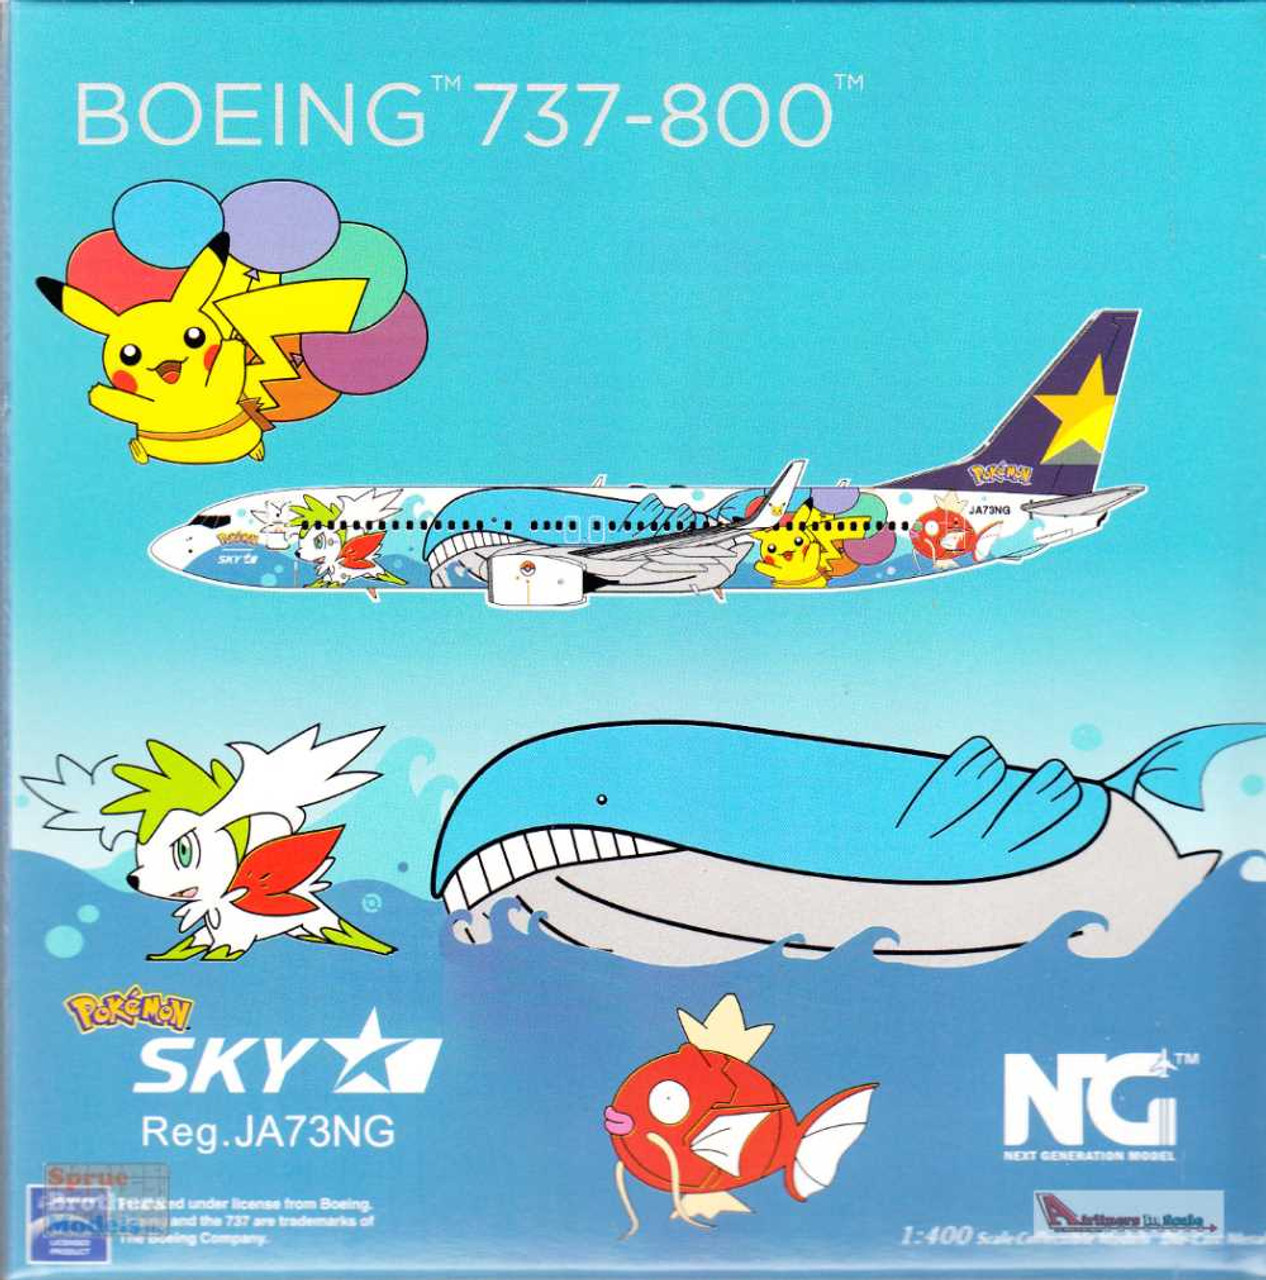 NGM58140 1:400 NG Model Skymark Airlines B737-800 Reg #JA73NG 'Pokemon'  (pre-painted/pre-built)